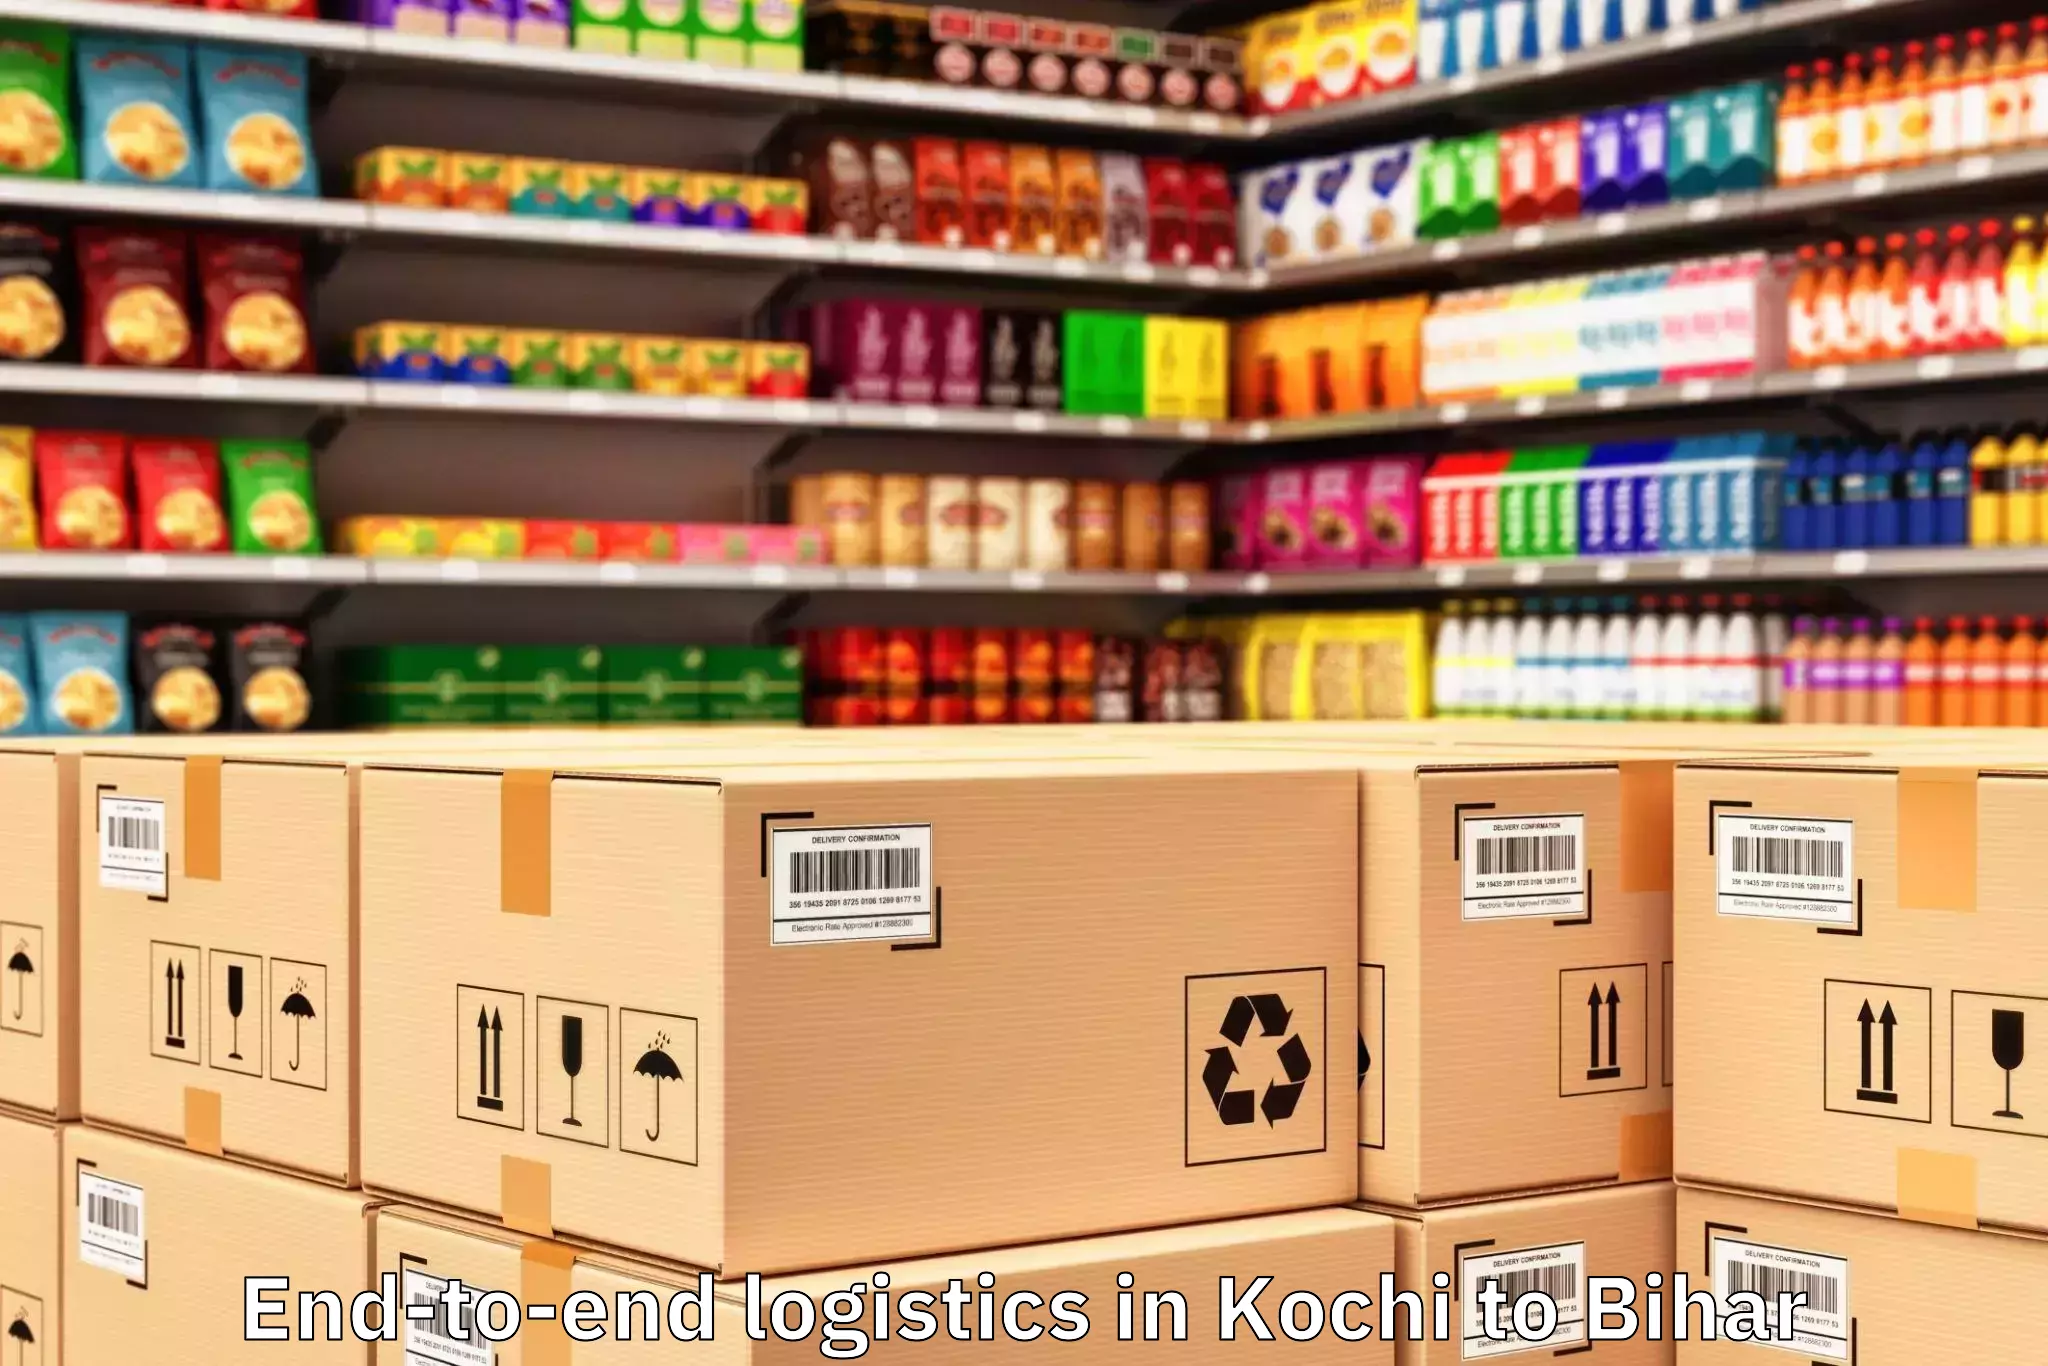 Professional Kochi to Itarhi End To End Logistics